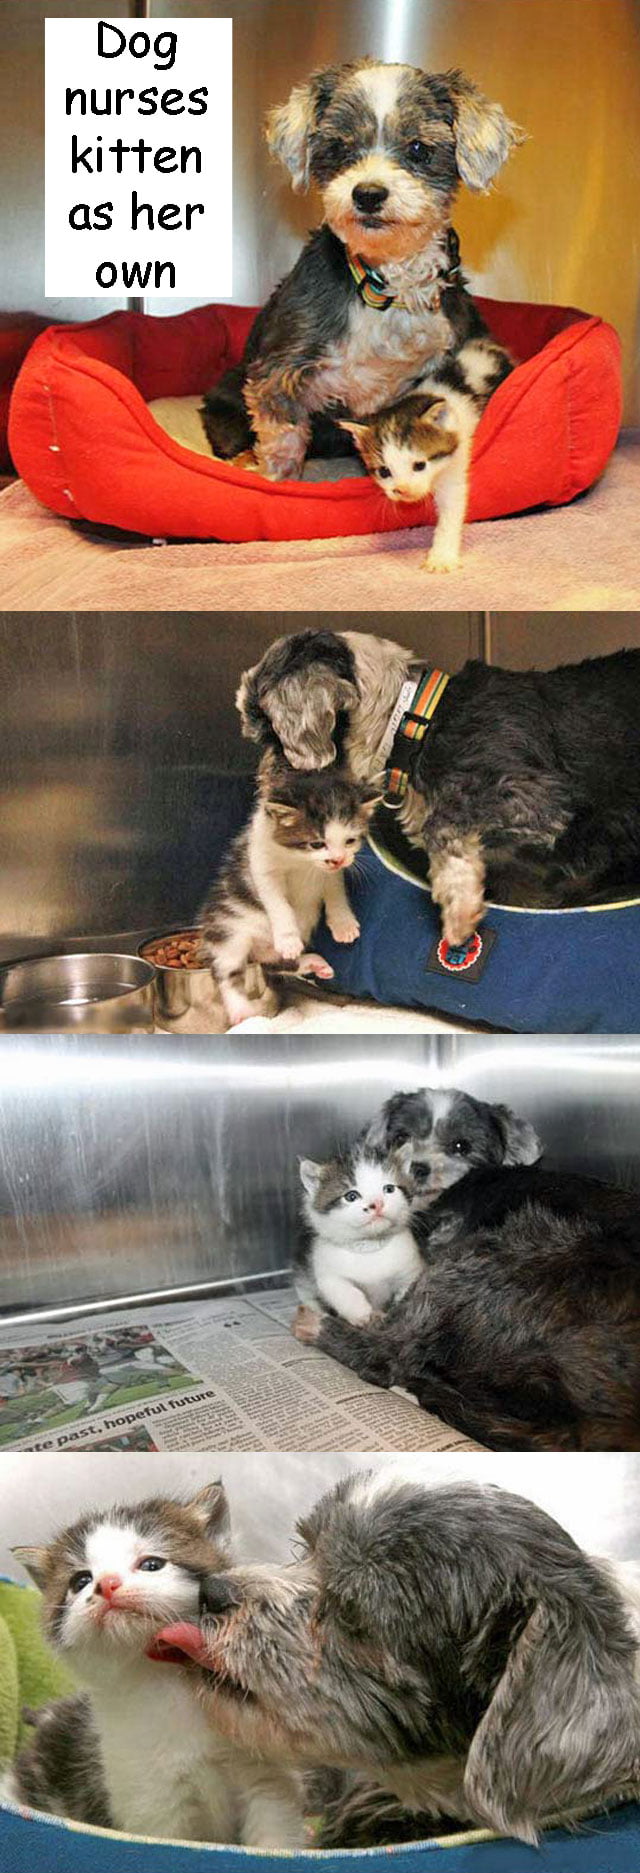 Rescued dog nursing kitten as her own